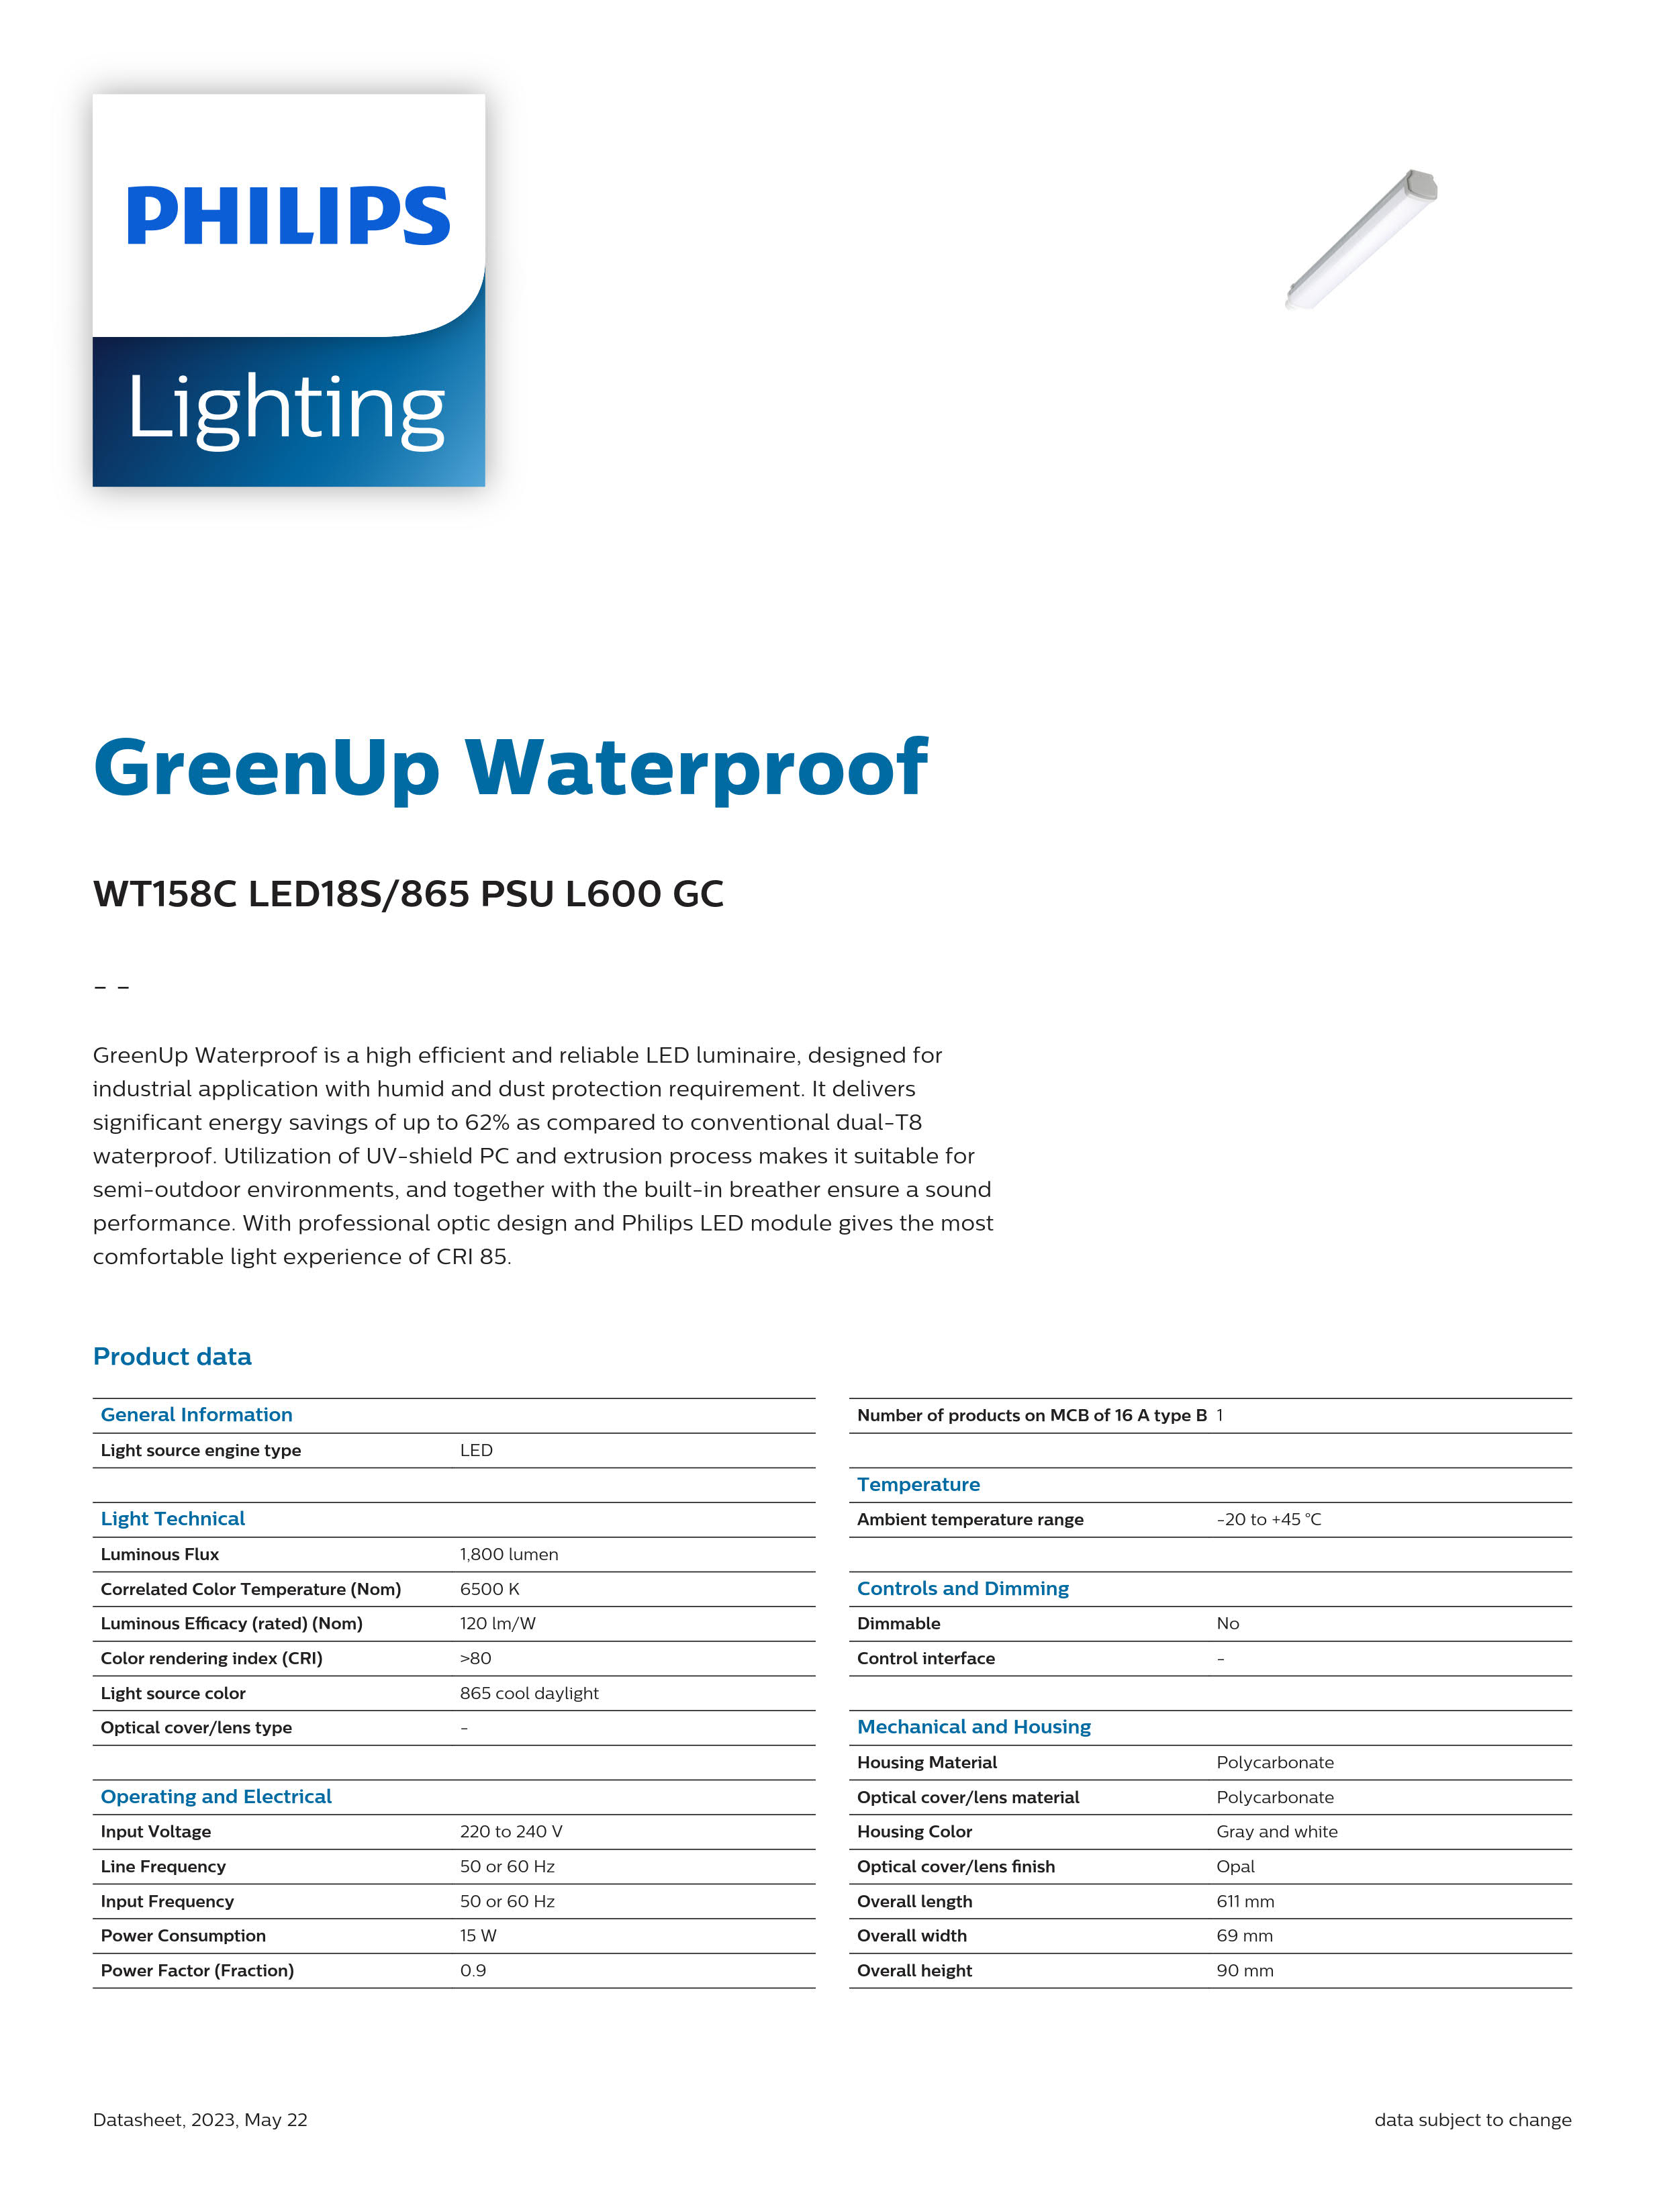 PHILIPS Waterproof WT158C LED18S/865 PSU L600 GC 911401894580